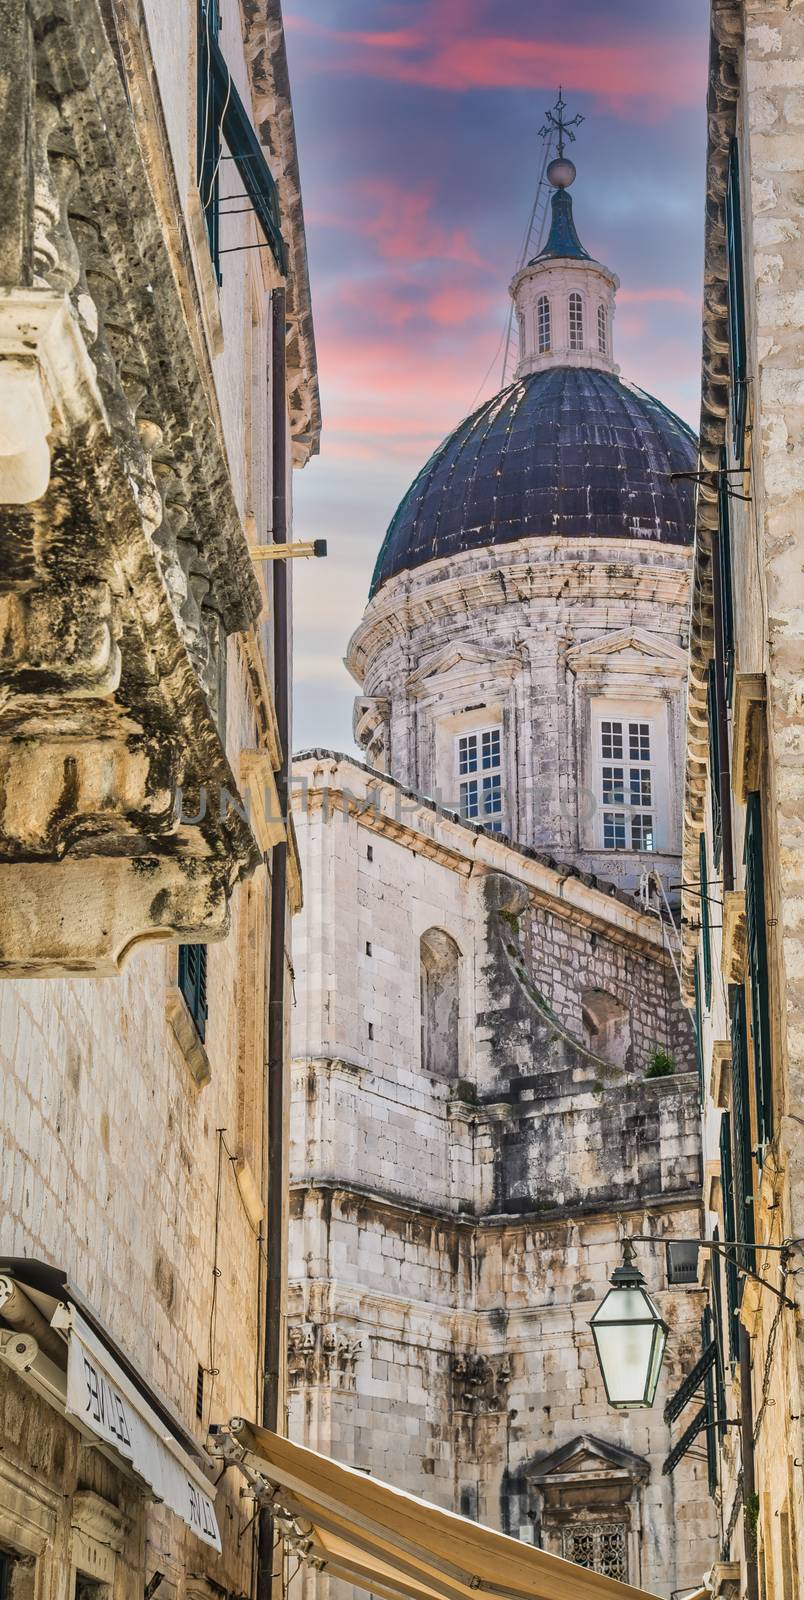 An old church dome through a narrow alley in Dubrovnik, Croatia